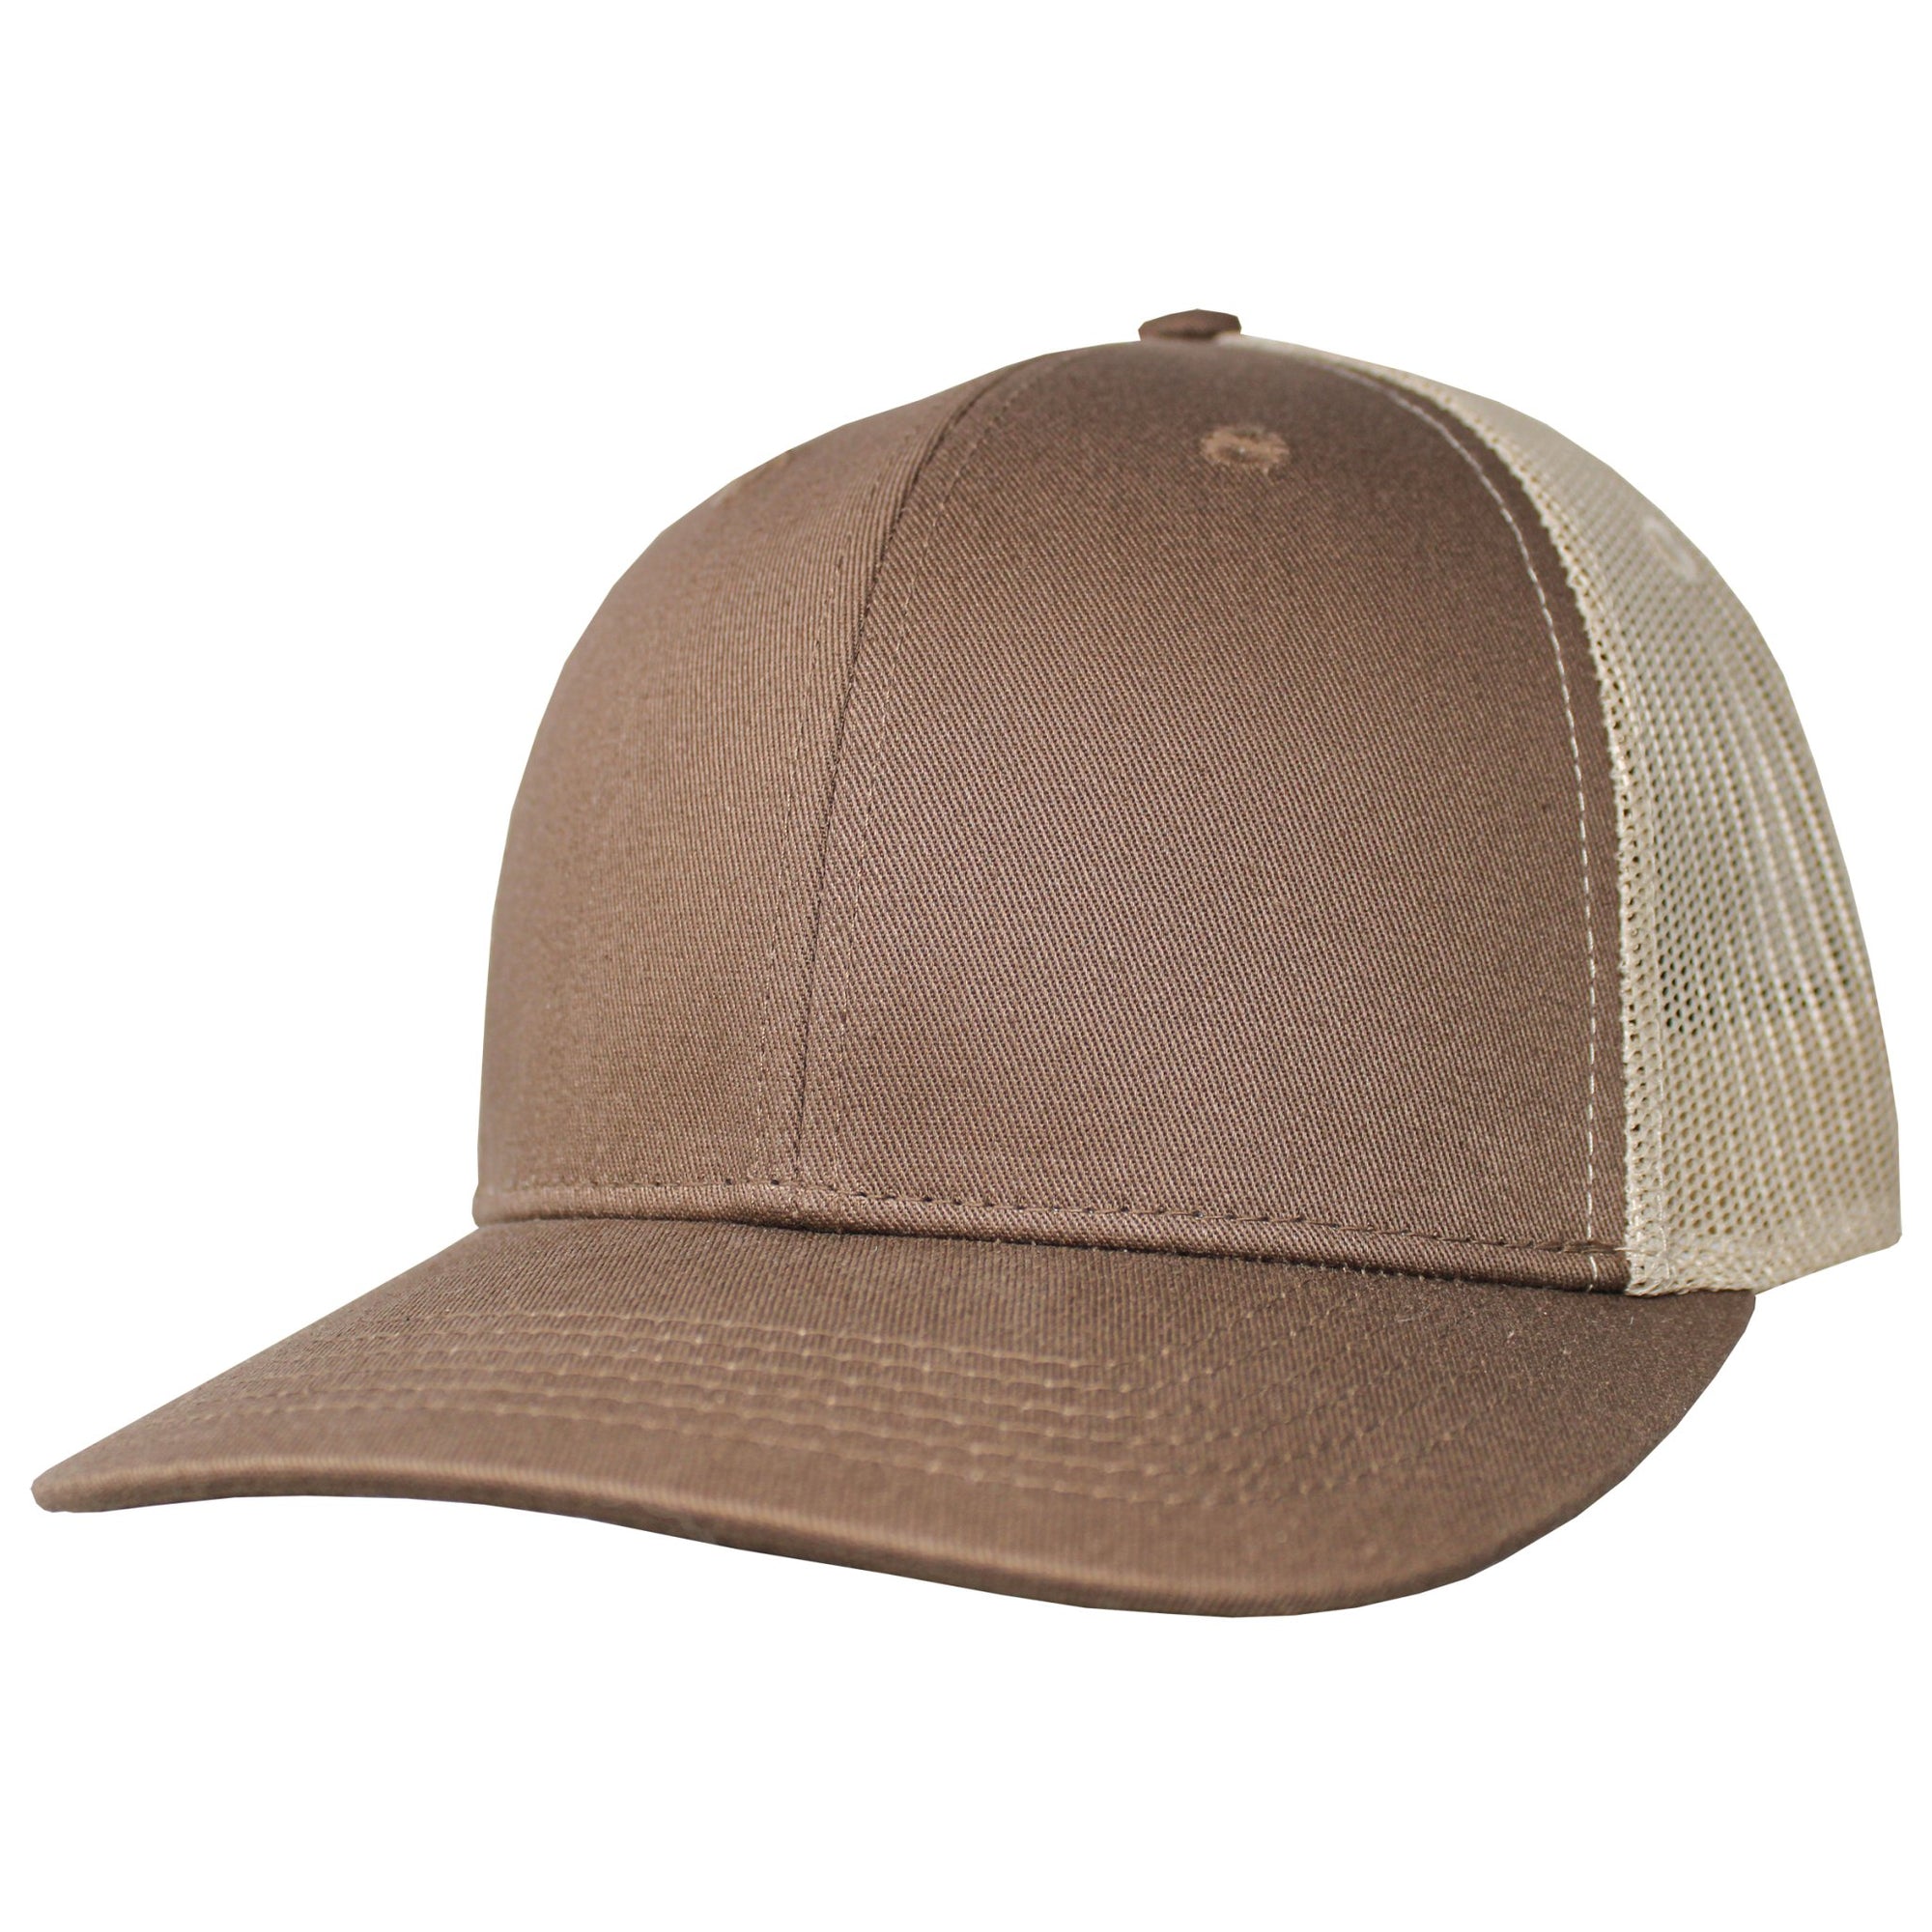 Blank Headwear - BC23 / 6 Panel Performance Trucker Cap - Brown/Khaki - Black Cat MFG - Hat